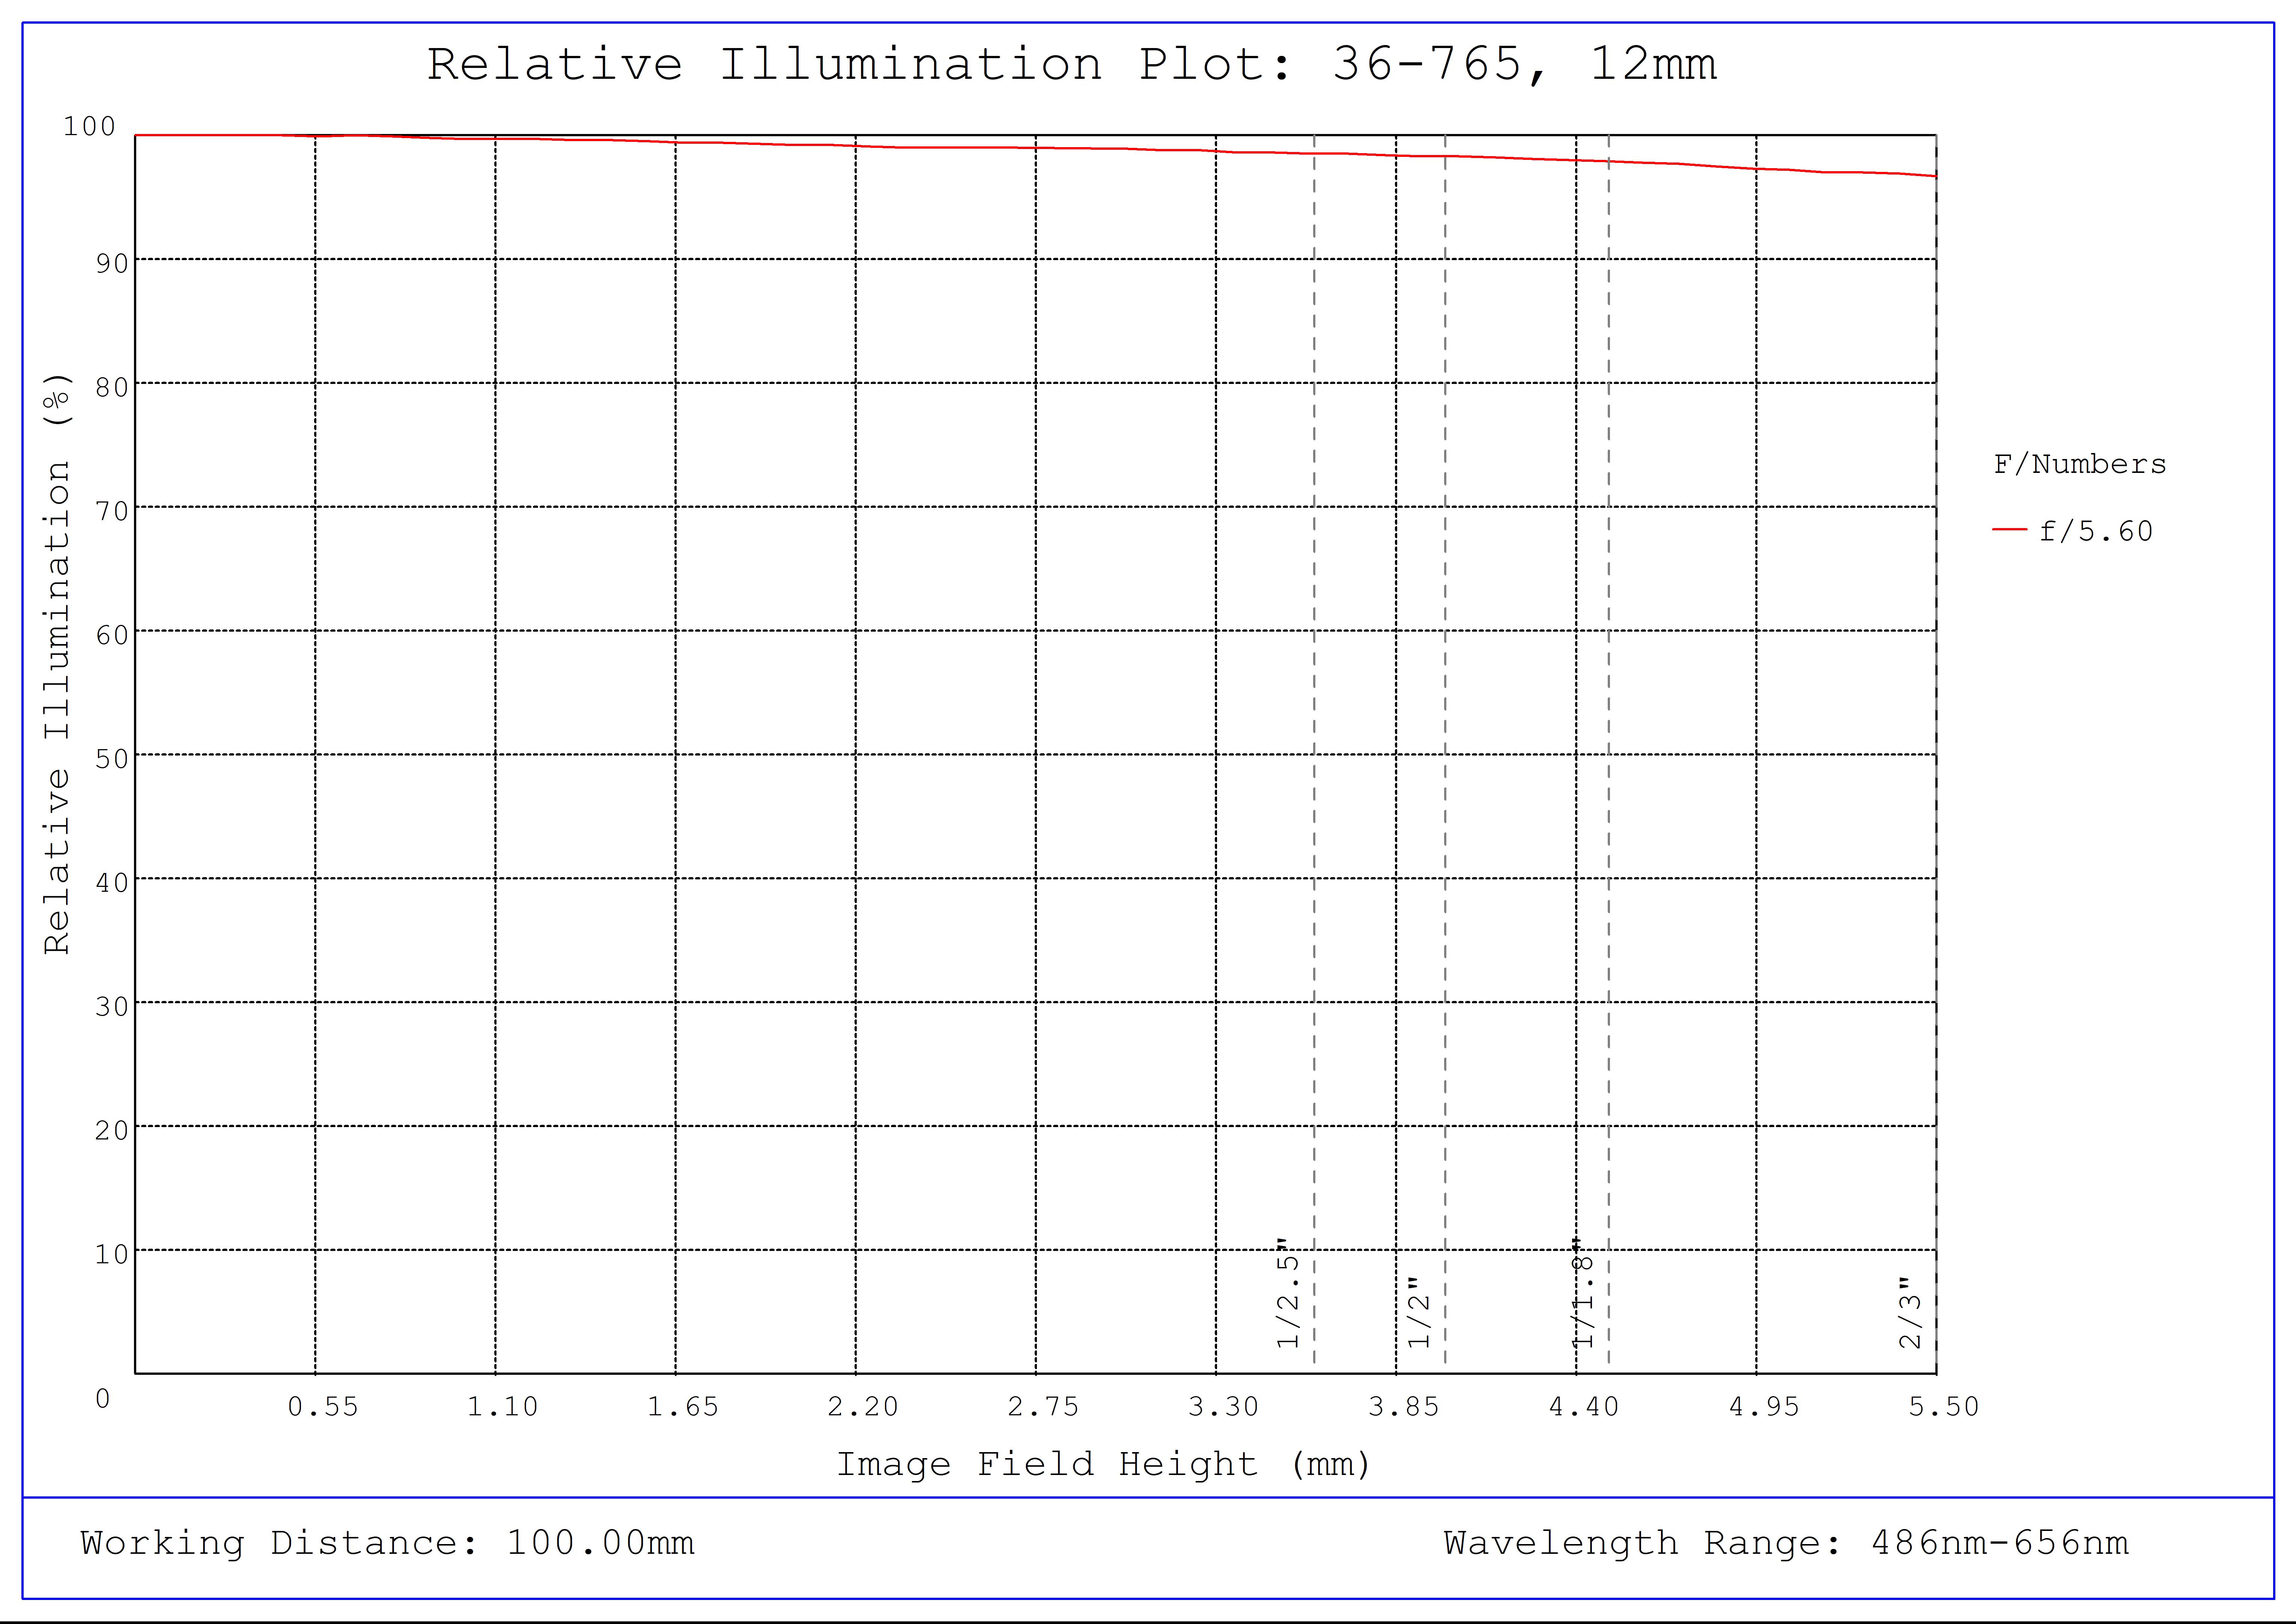 #36-765, 12mm f/5.6, 1000mm-∞ Primary WD, HRi Series Fixed Focal Length Lens, Relative Illumination Plot